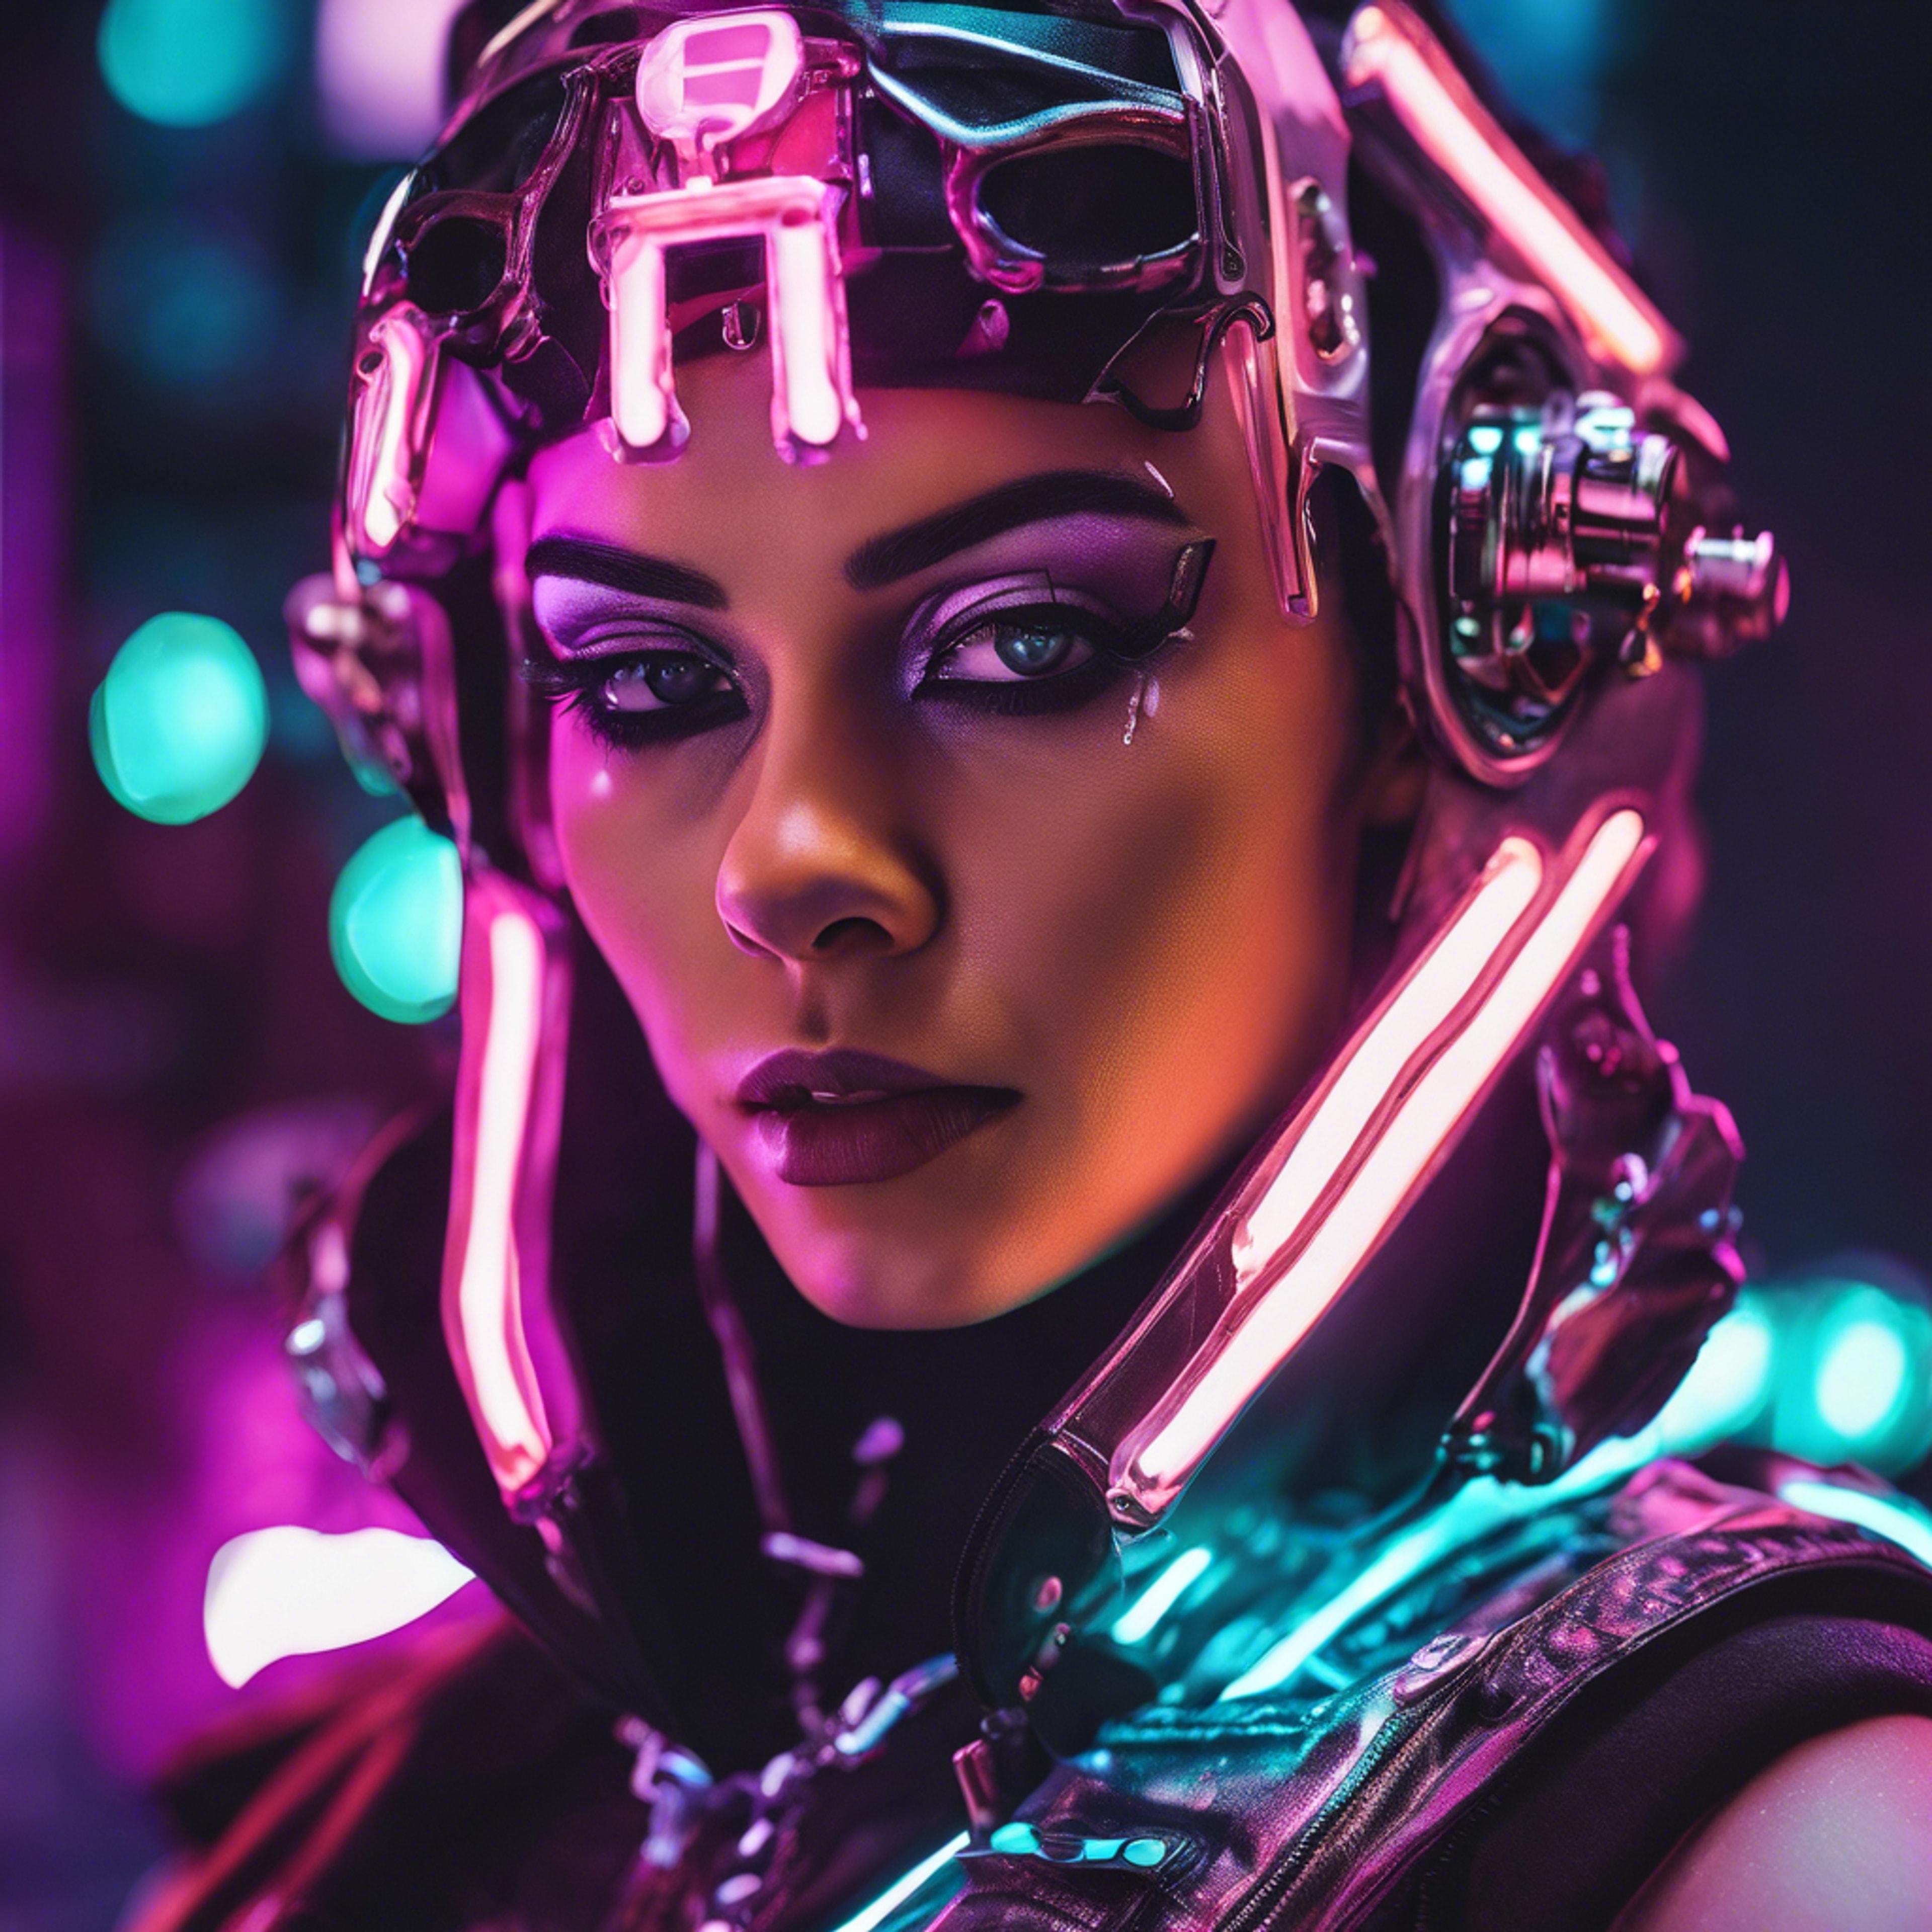 A close-up portrait of a cyberpunk baddie in neon lighting, metal piercings, and sci-fi-inspired makeup. Обои[9ac0123c92044077bebc]